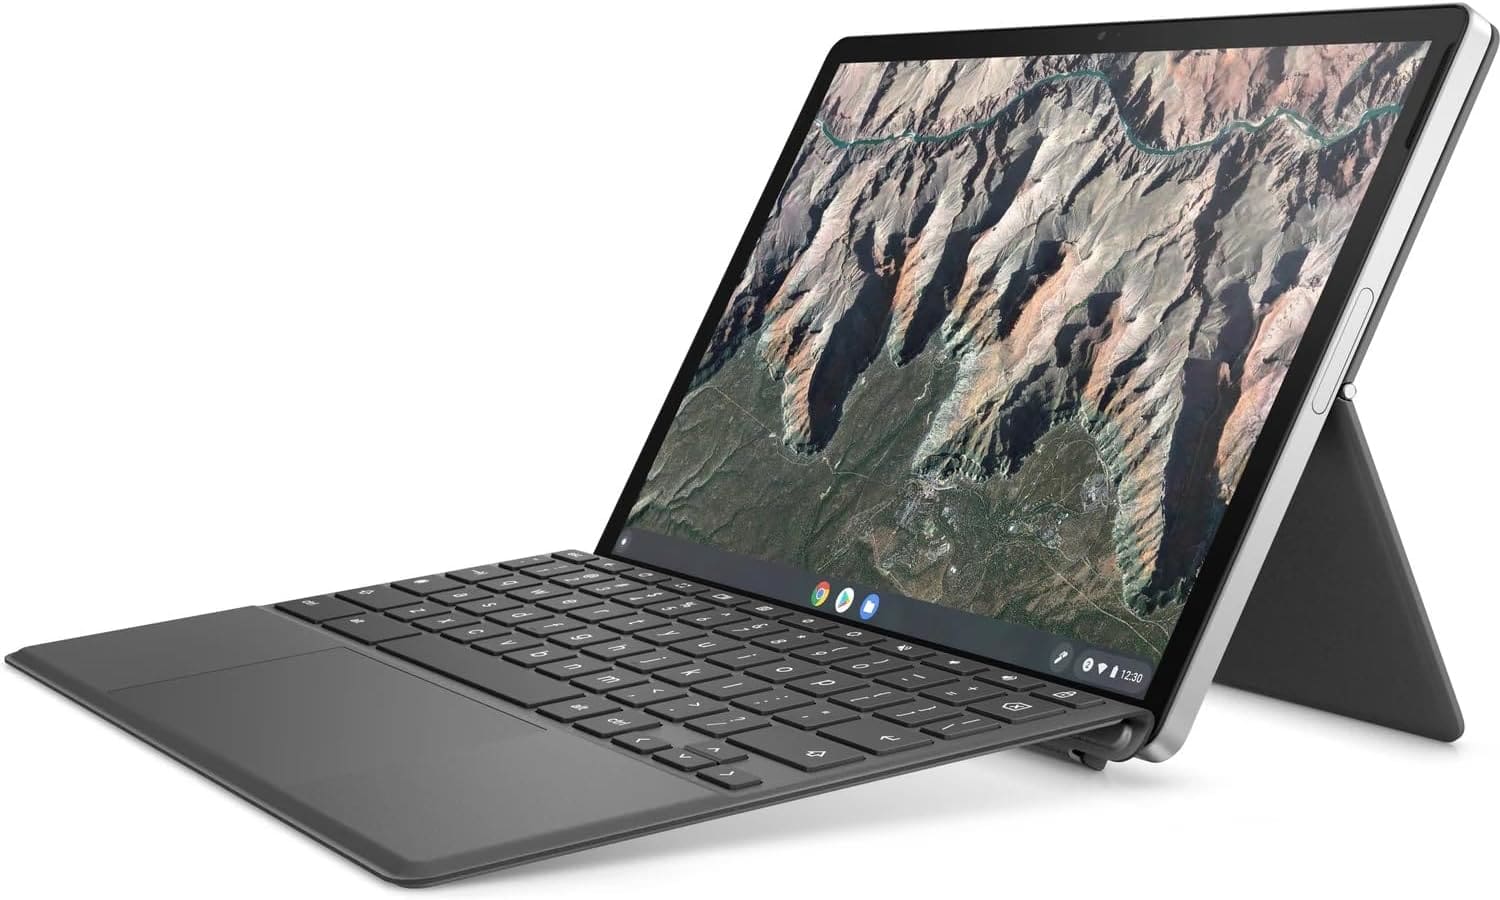 The HP Chromebook x2 11